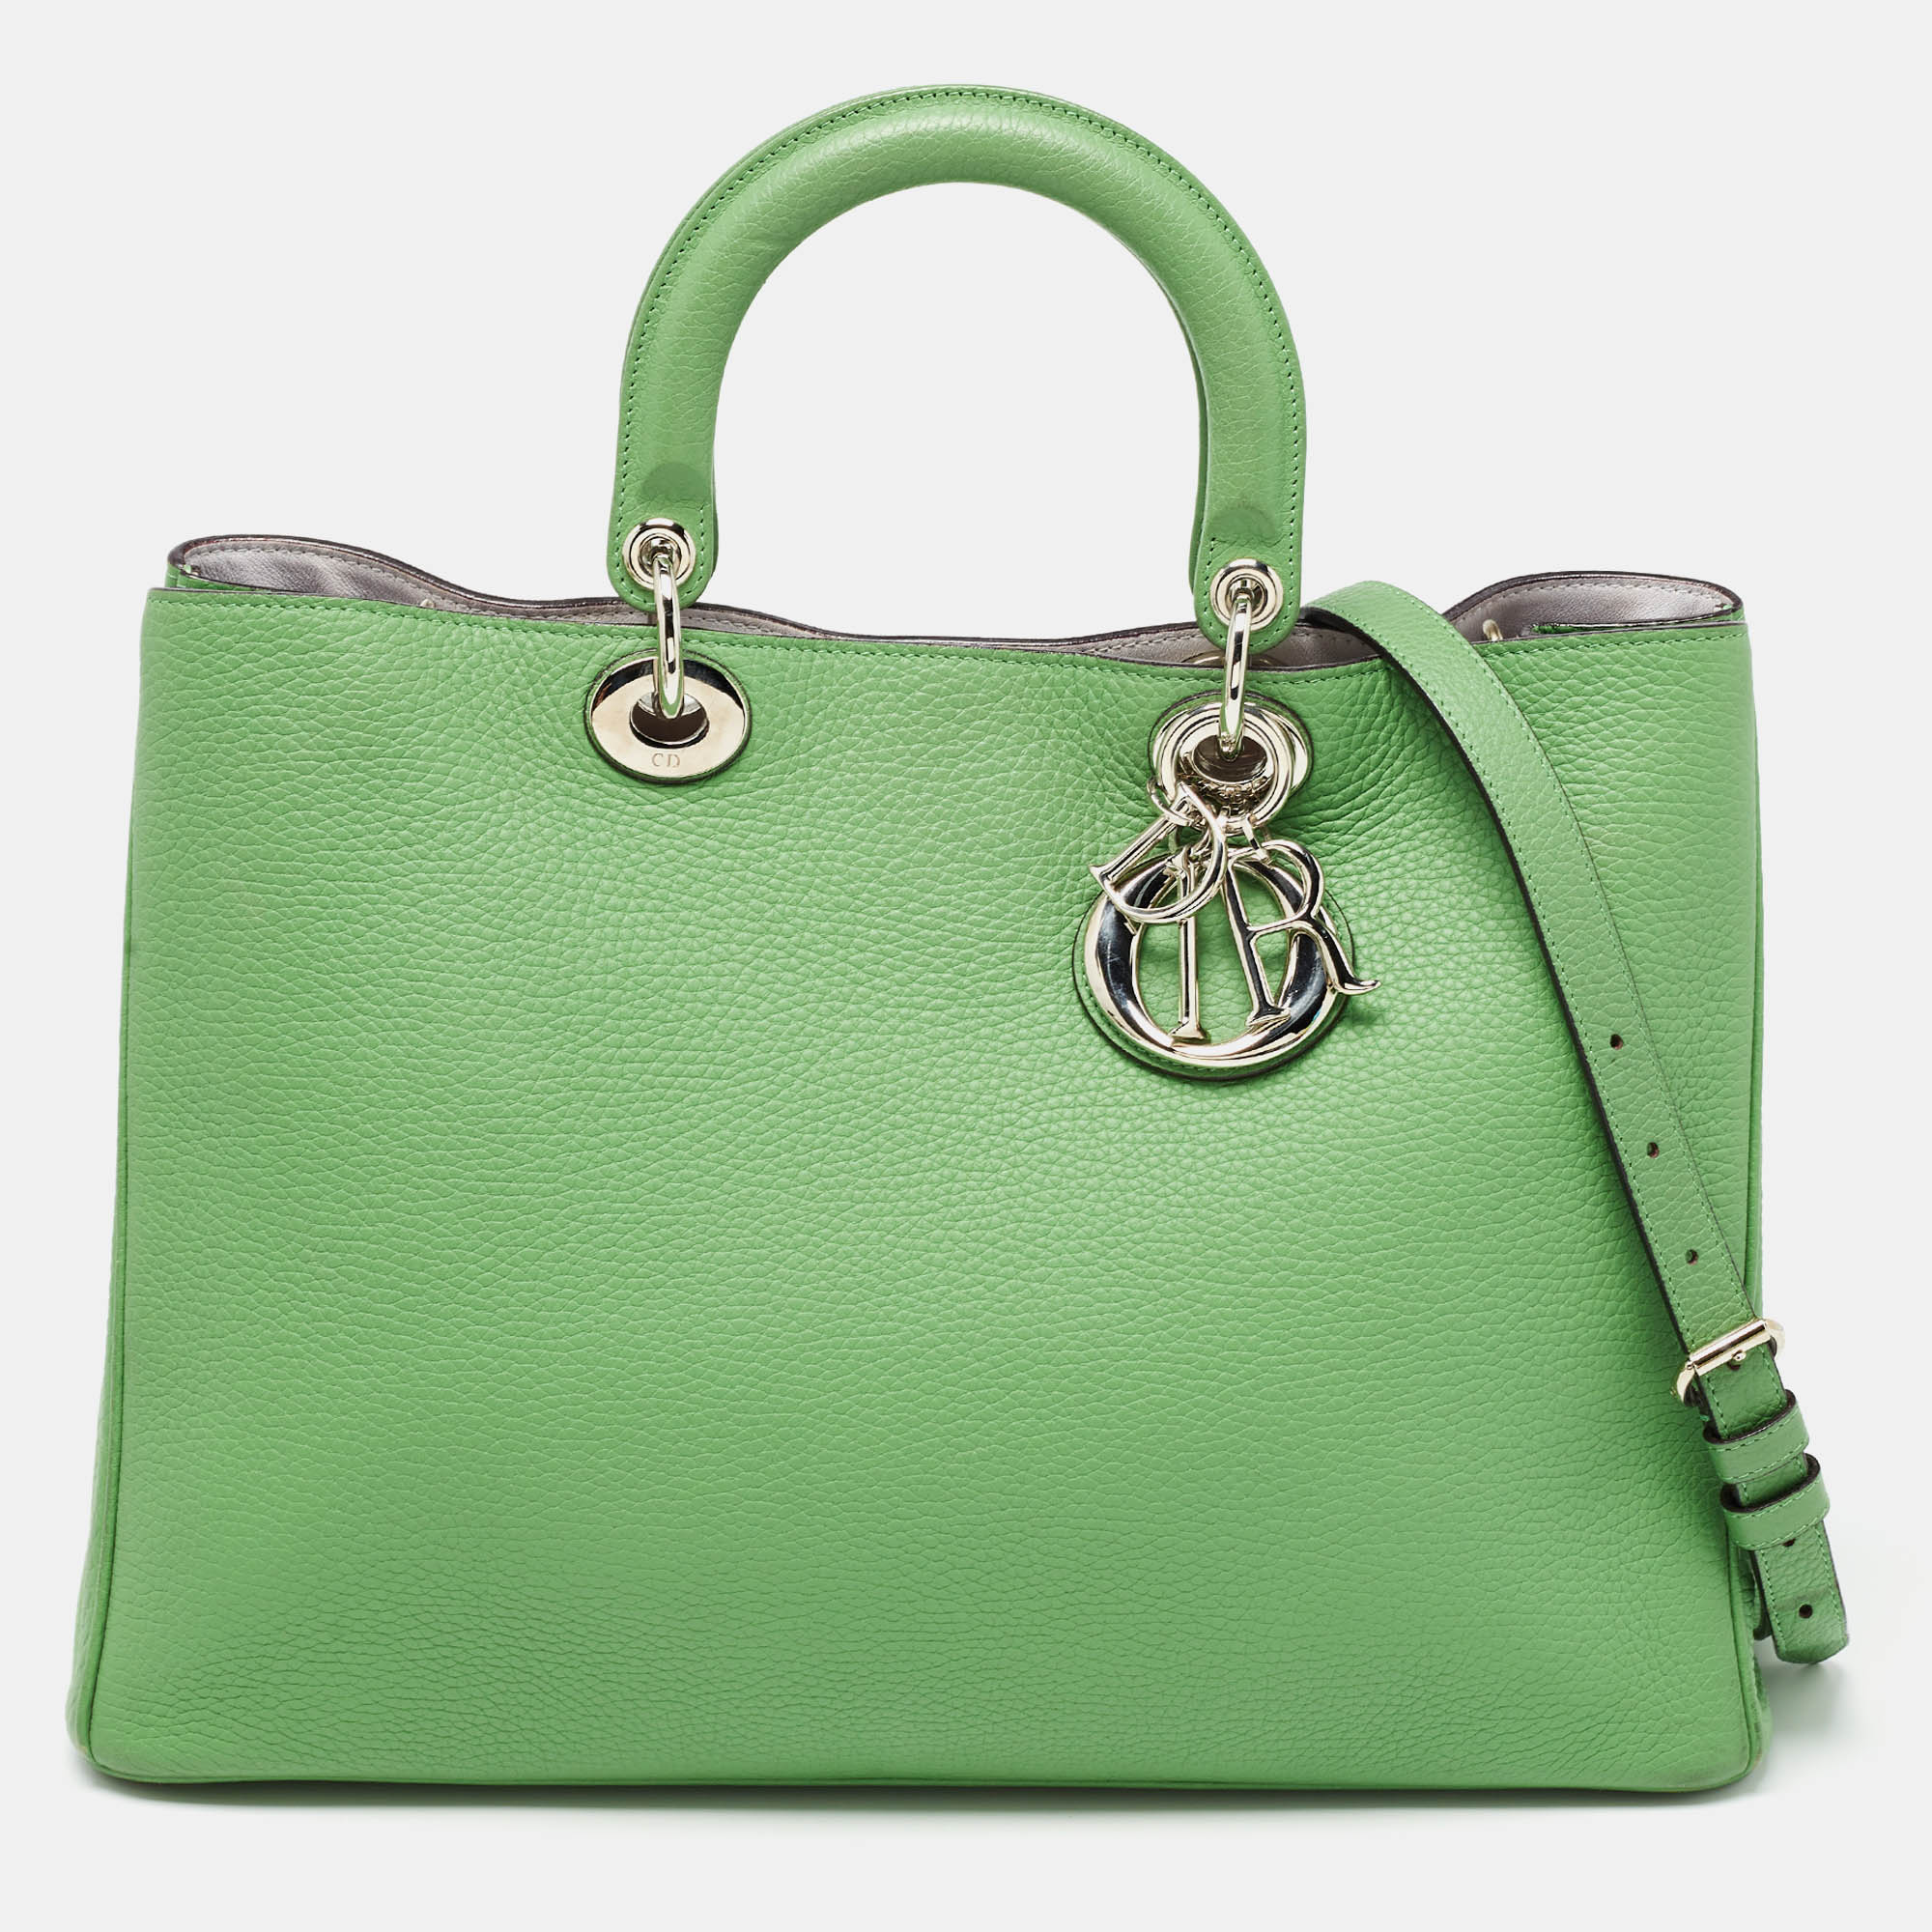 Dior green leather large diorissimo shopper tote